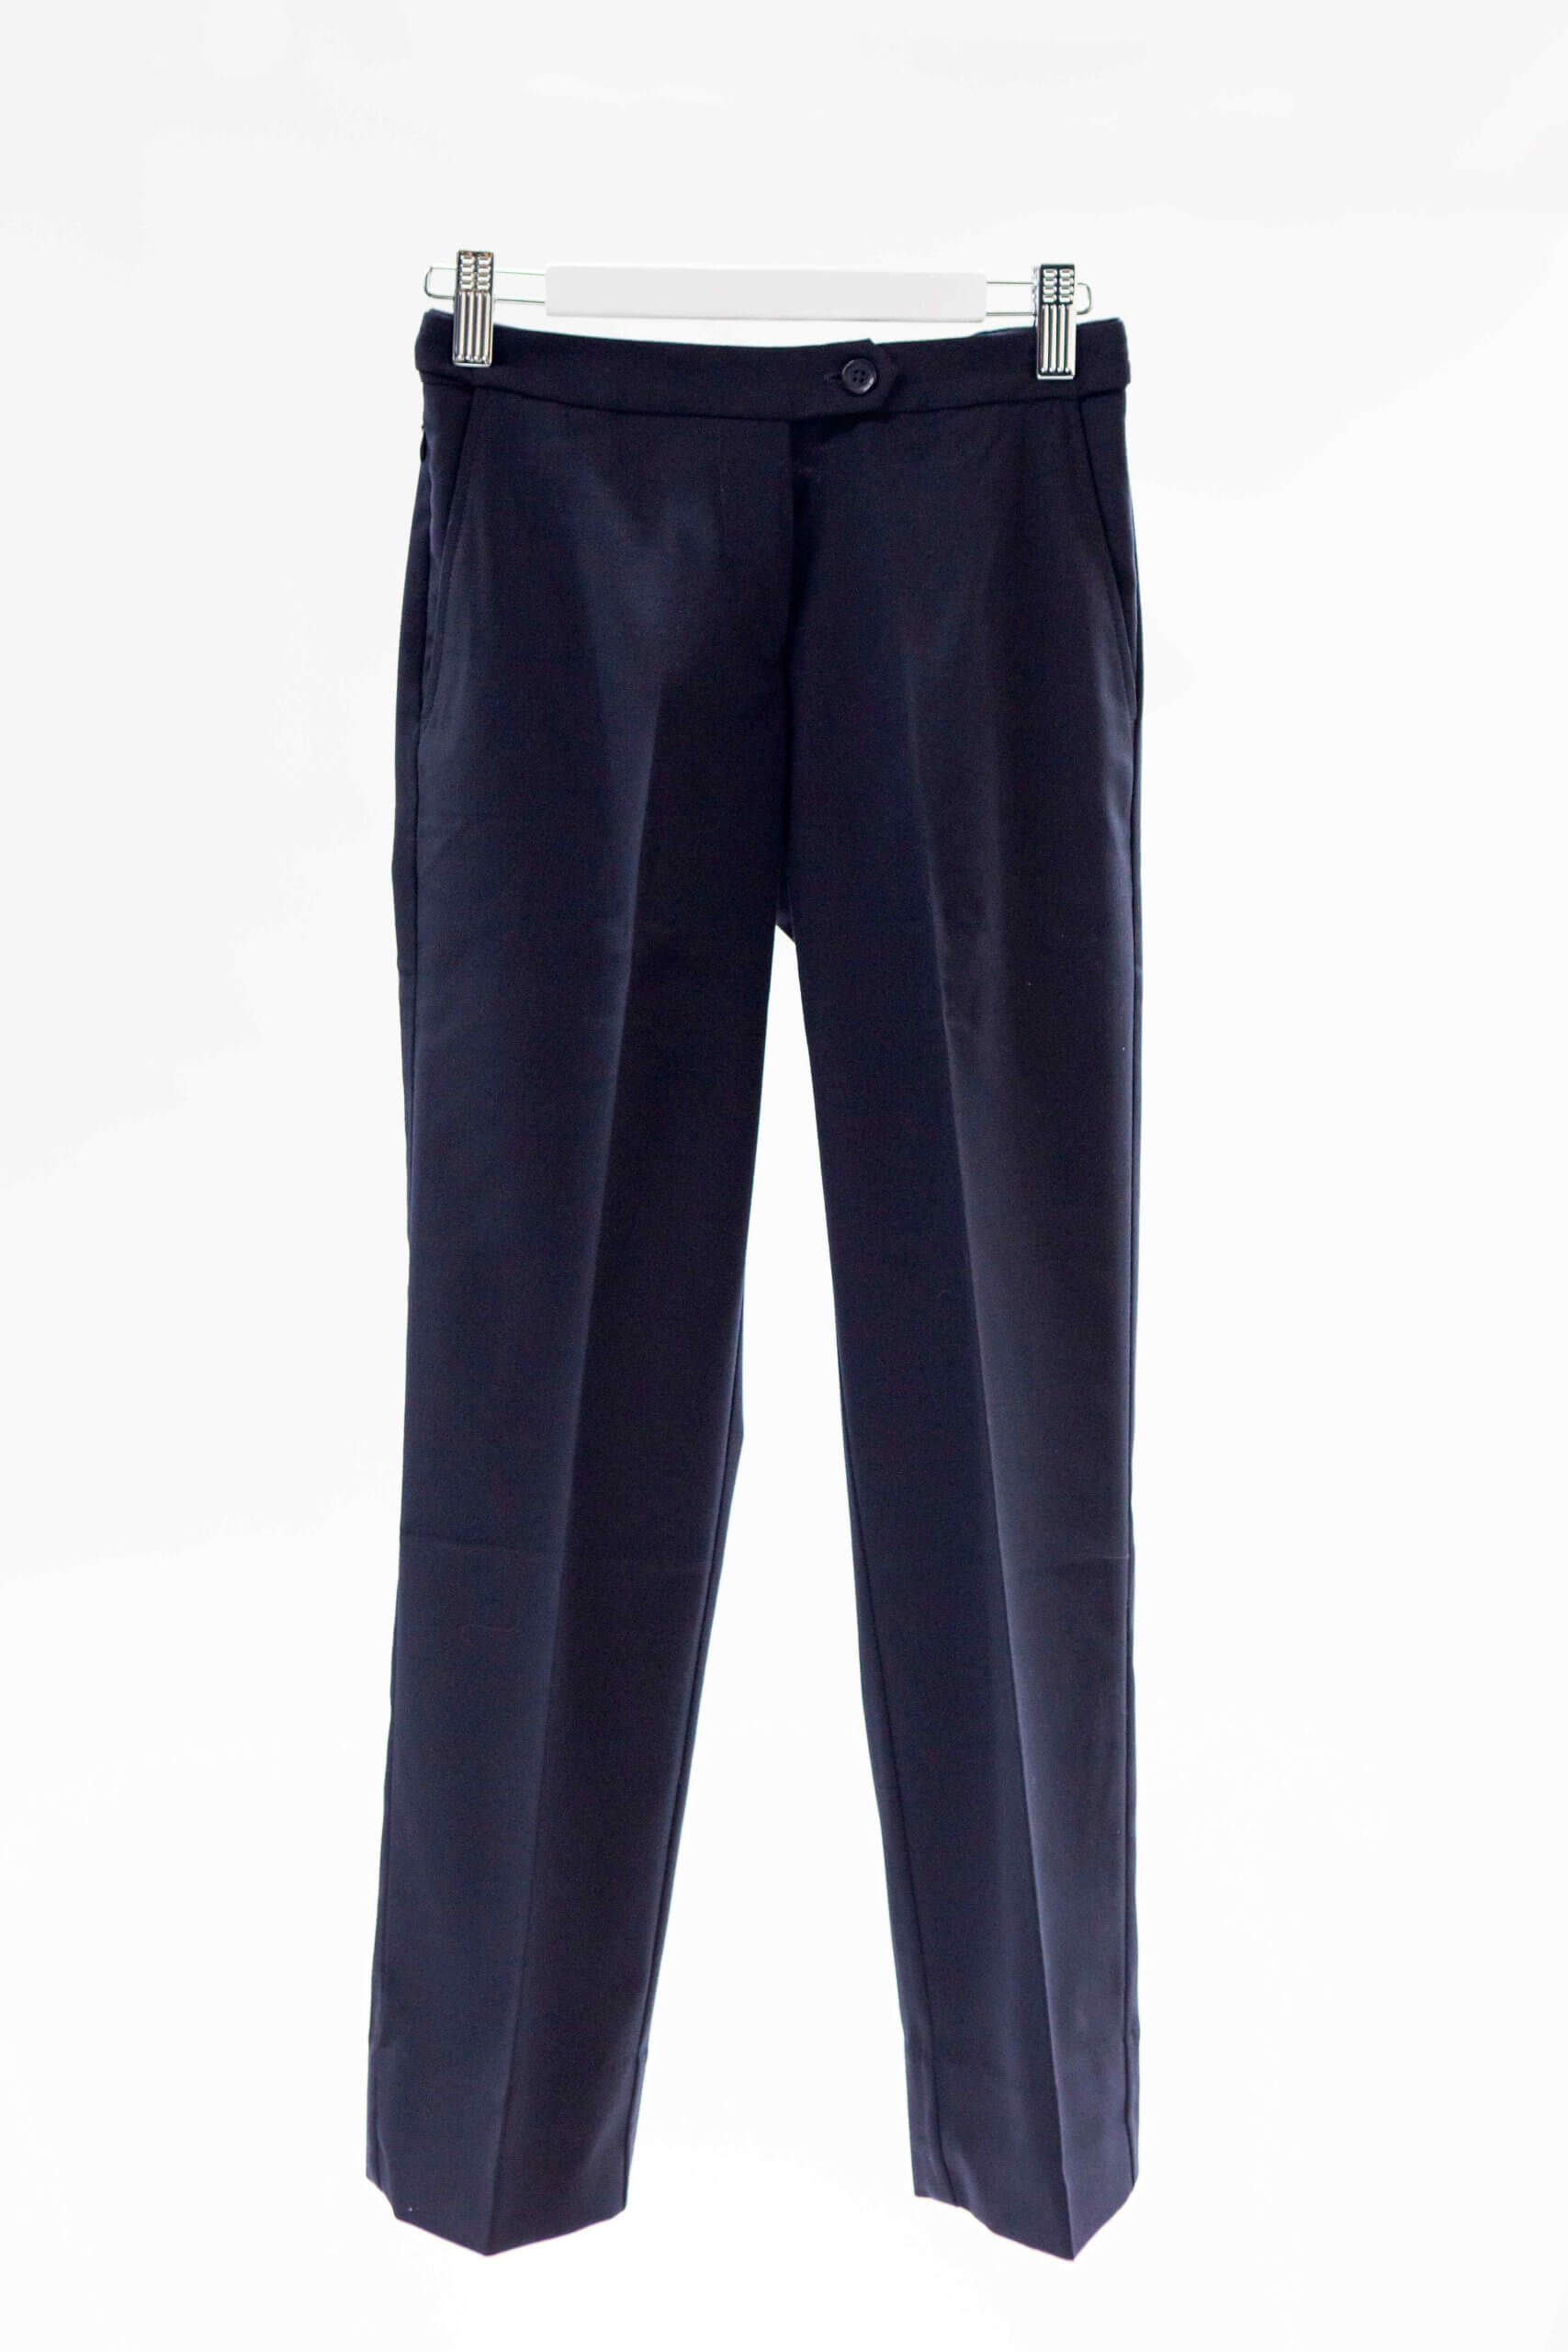 Formal - Navy Pants - Flinders Uniform Shop